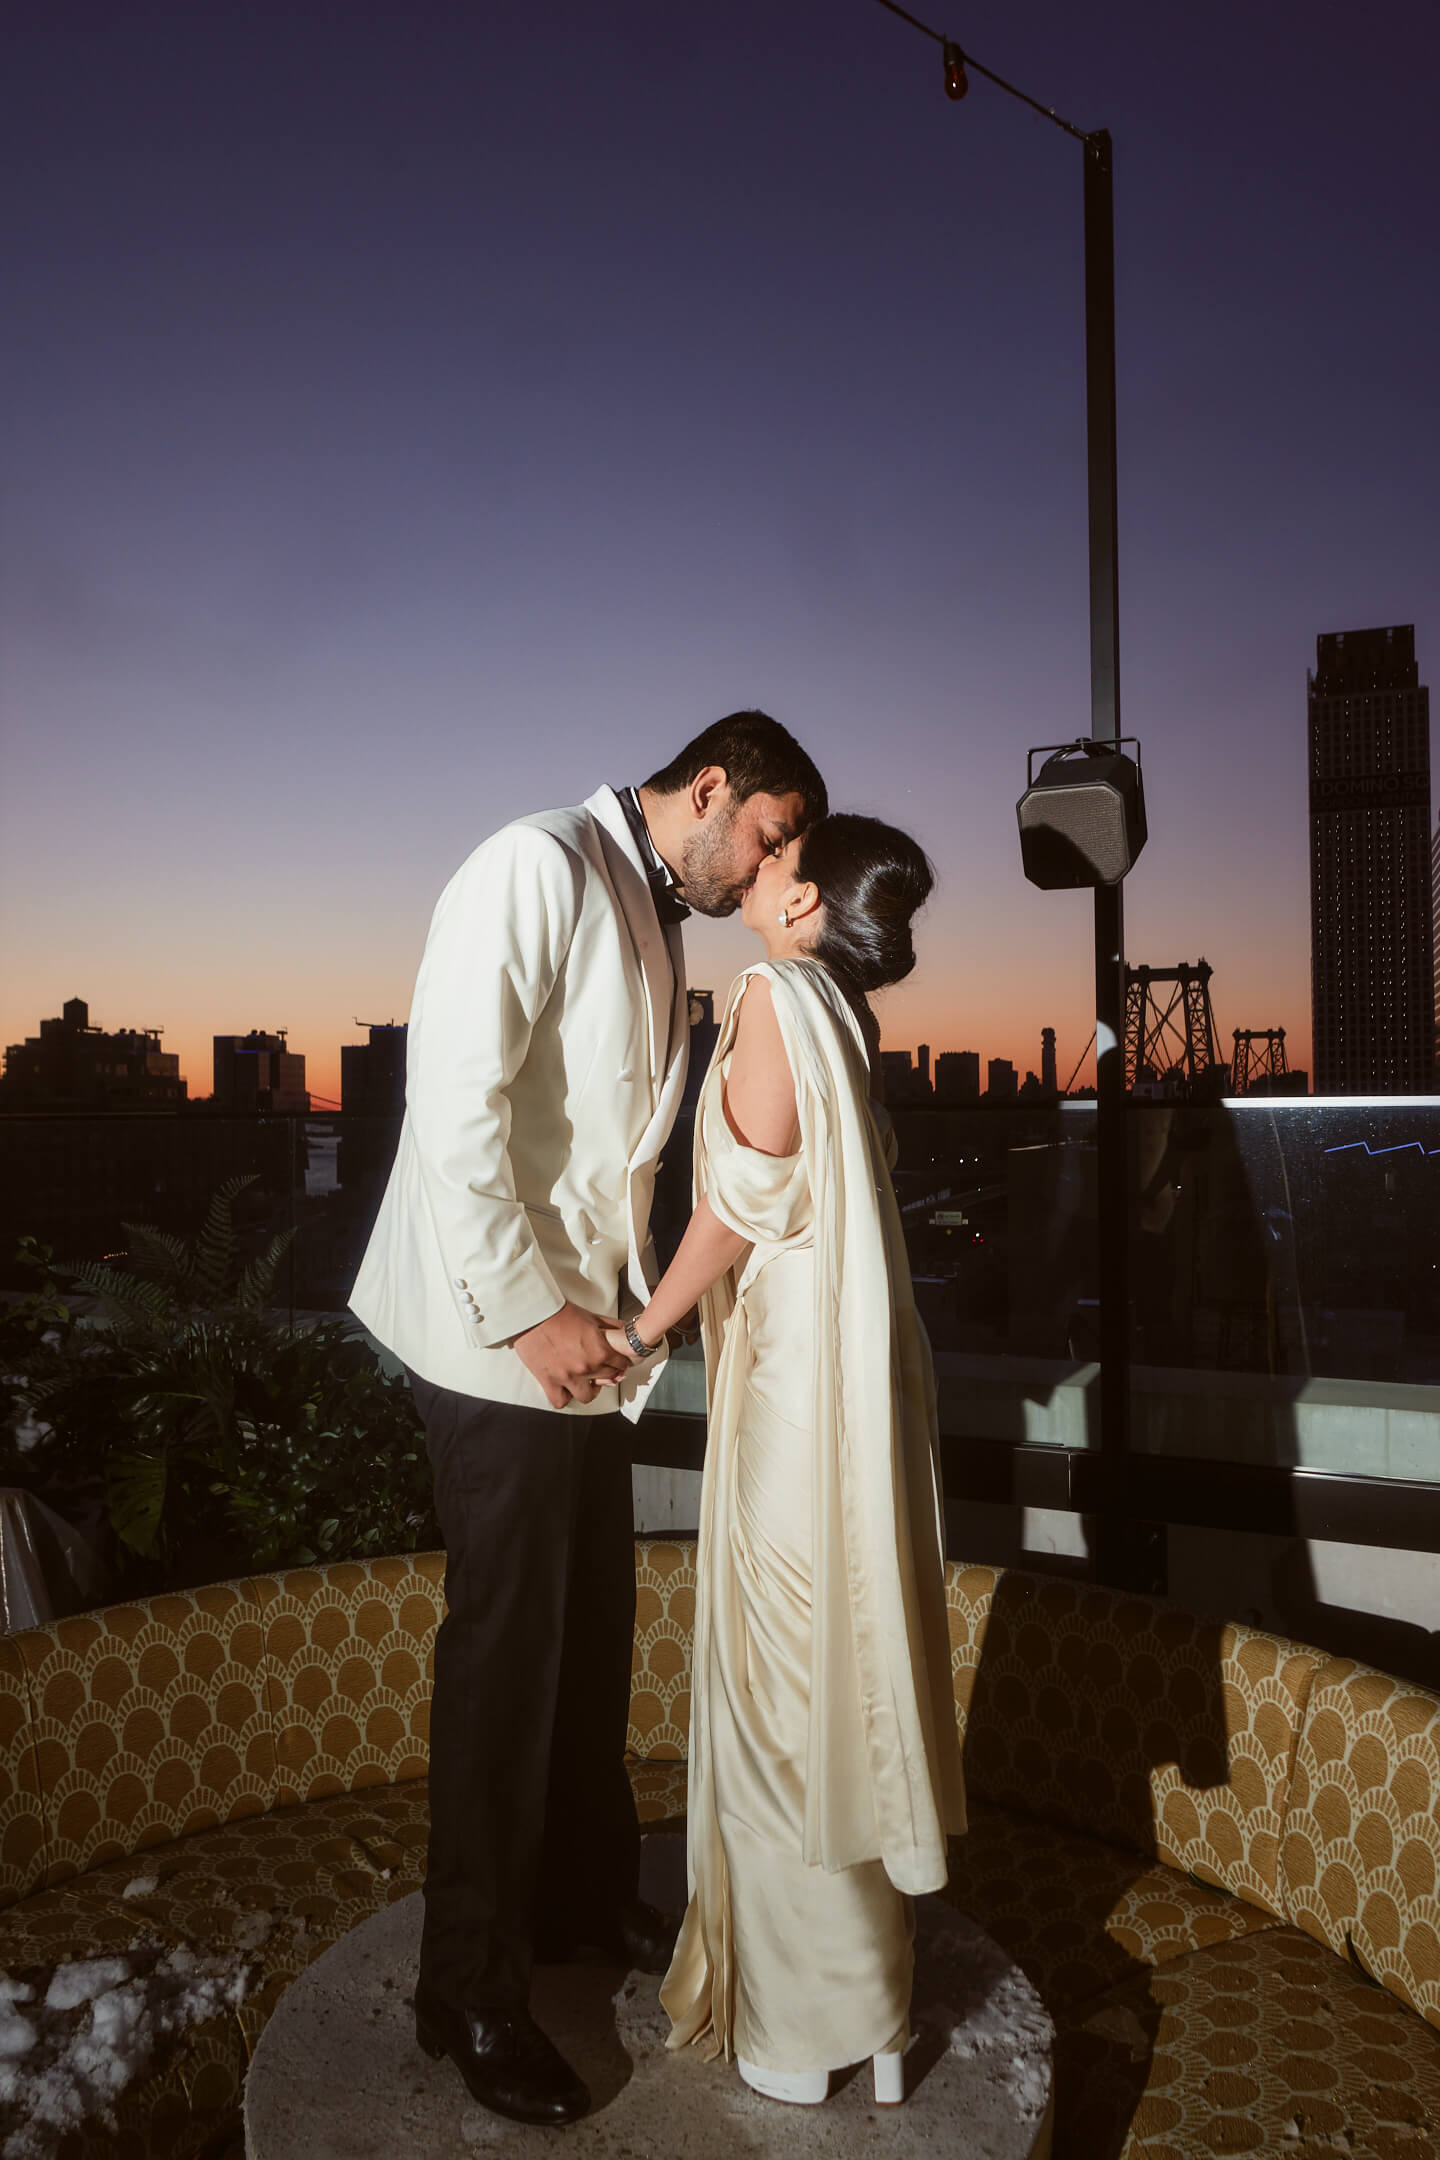 Drishti & Viv - Wedding Ceremony Celebration - Wedding Photography - Event Photography - Moxy Williamsburg - Brooklyn, New York